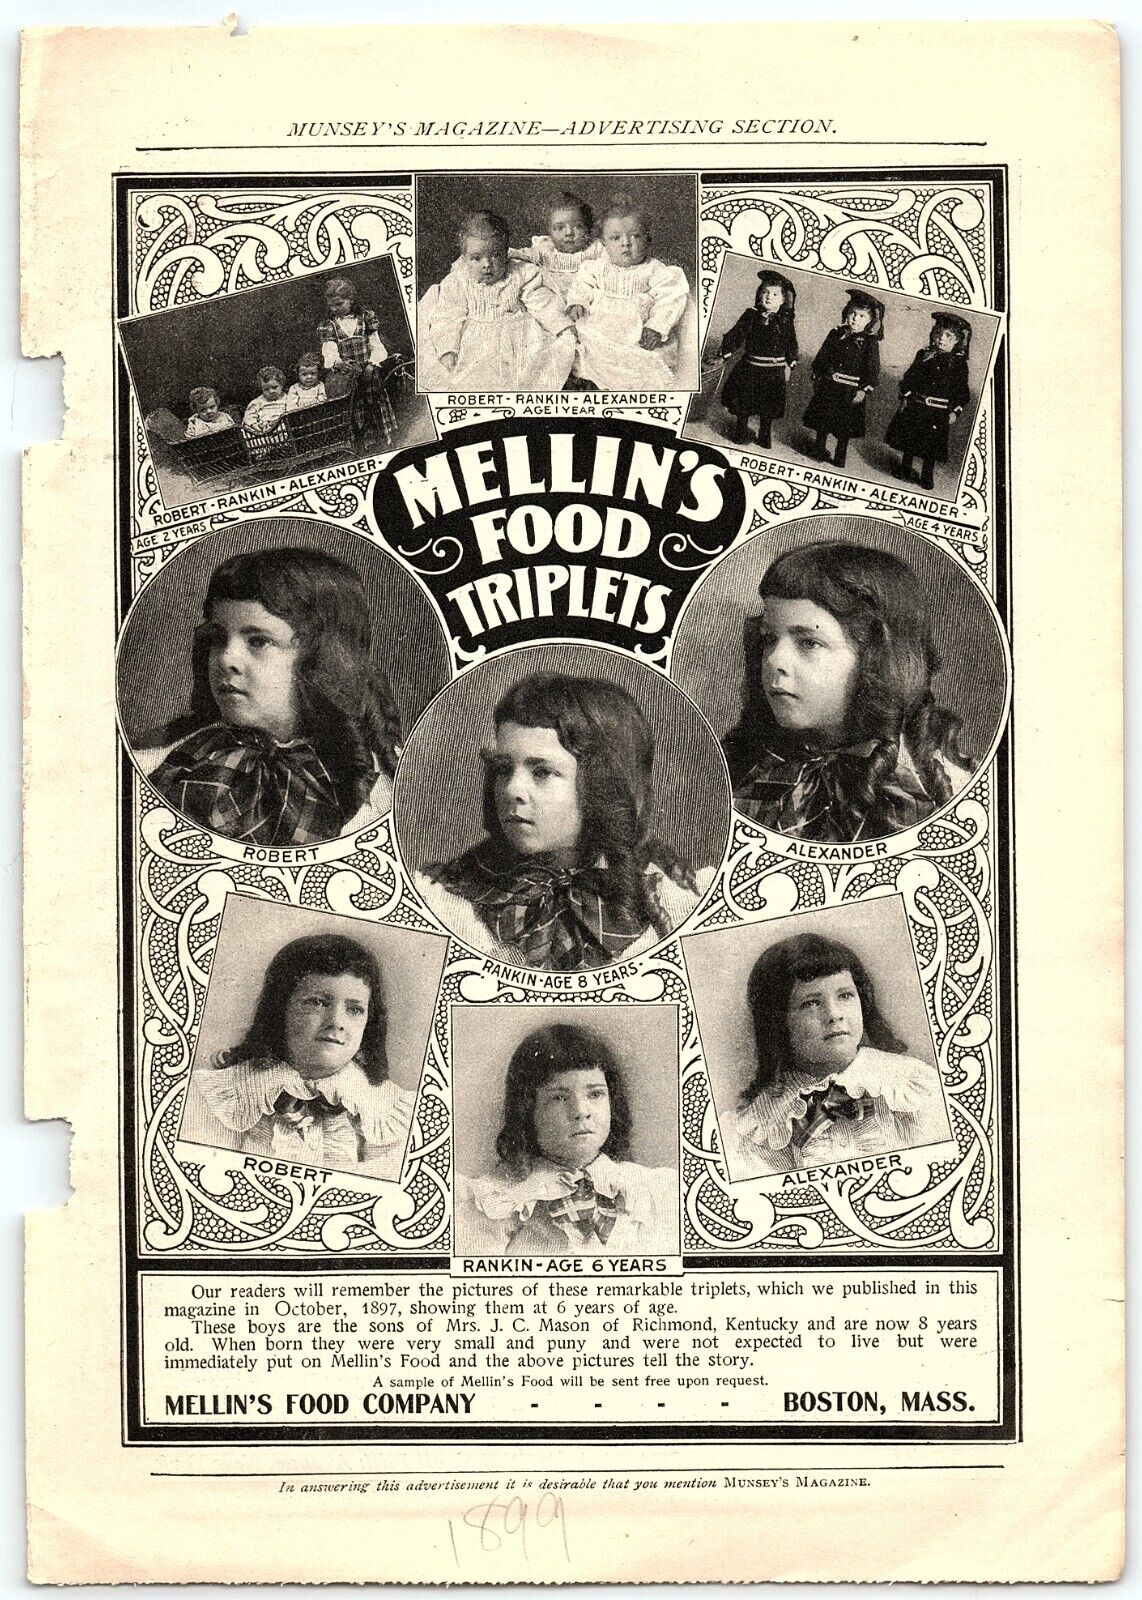 1899 MELLIN\'S FOOD COMPANY BOSTON MASS MELLIN\'S FOOD TRIPLETS ADVERTISEMENT Z699